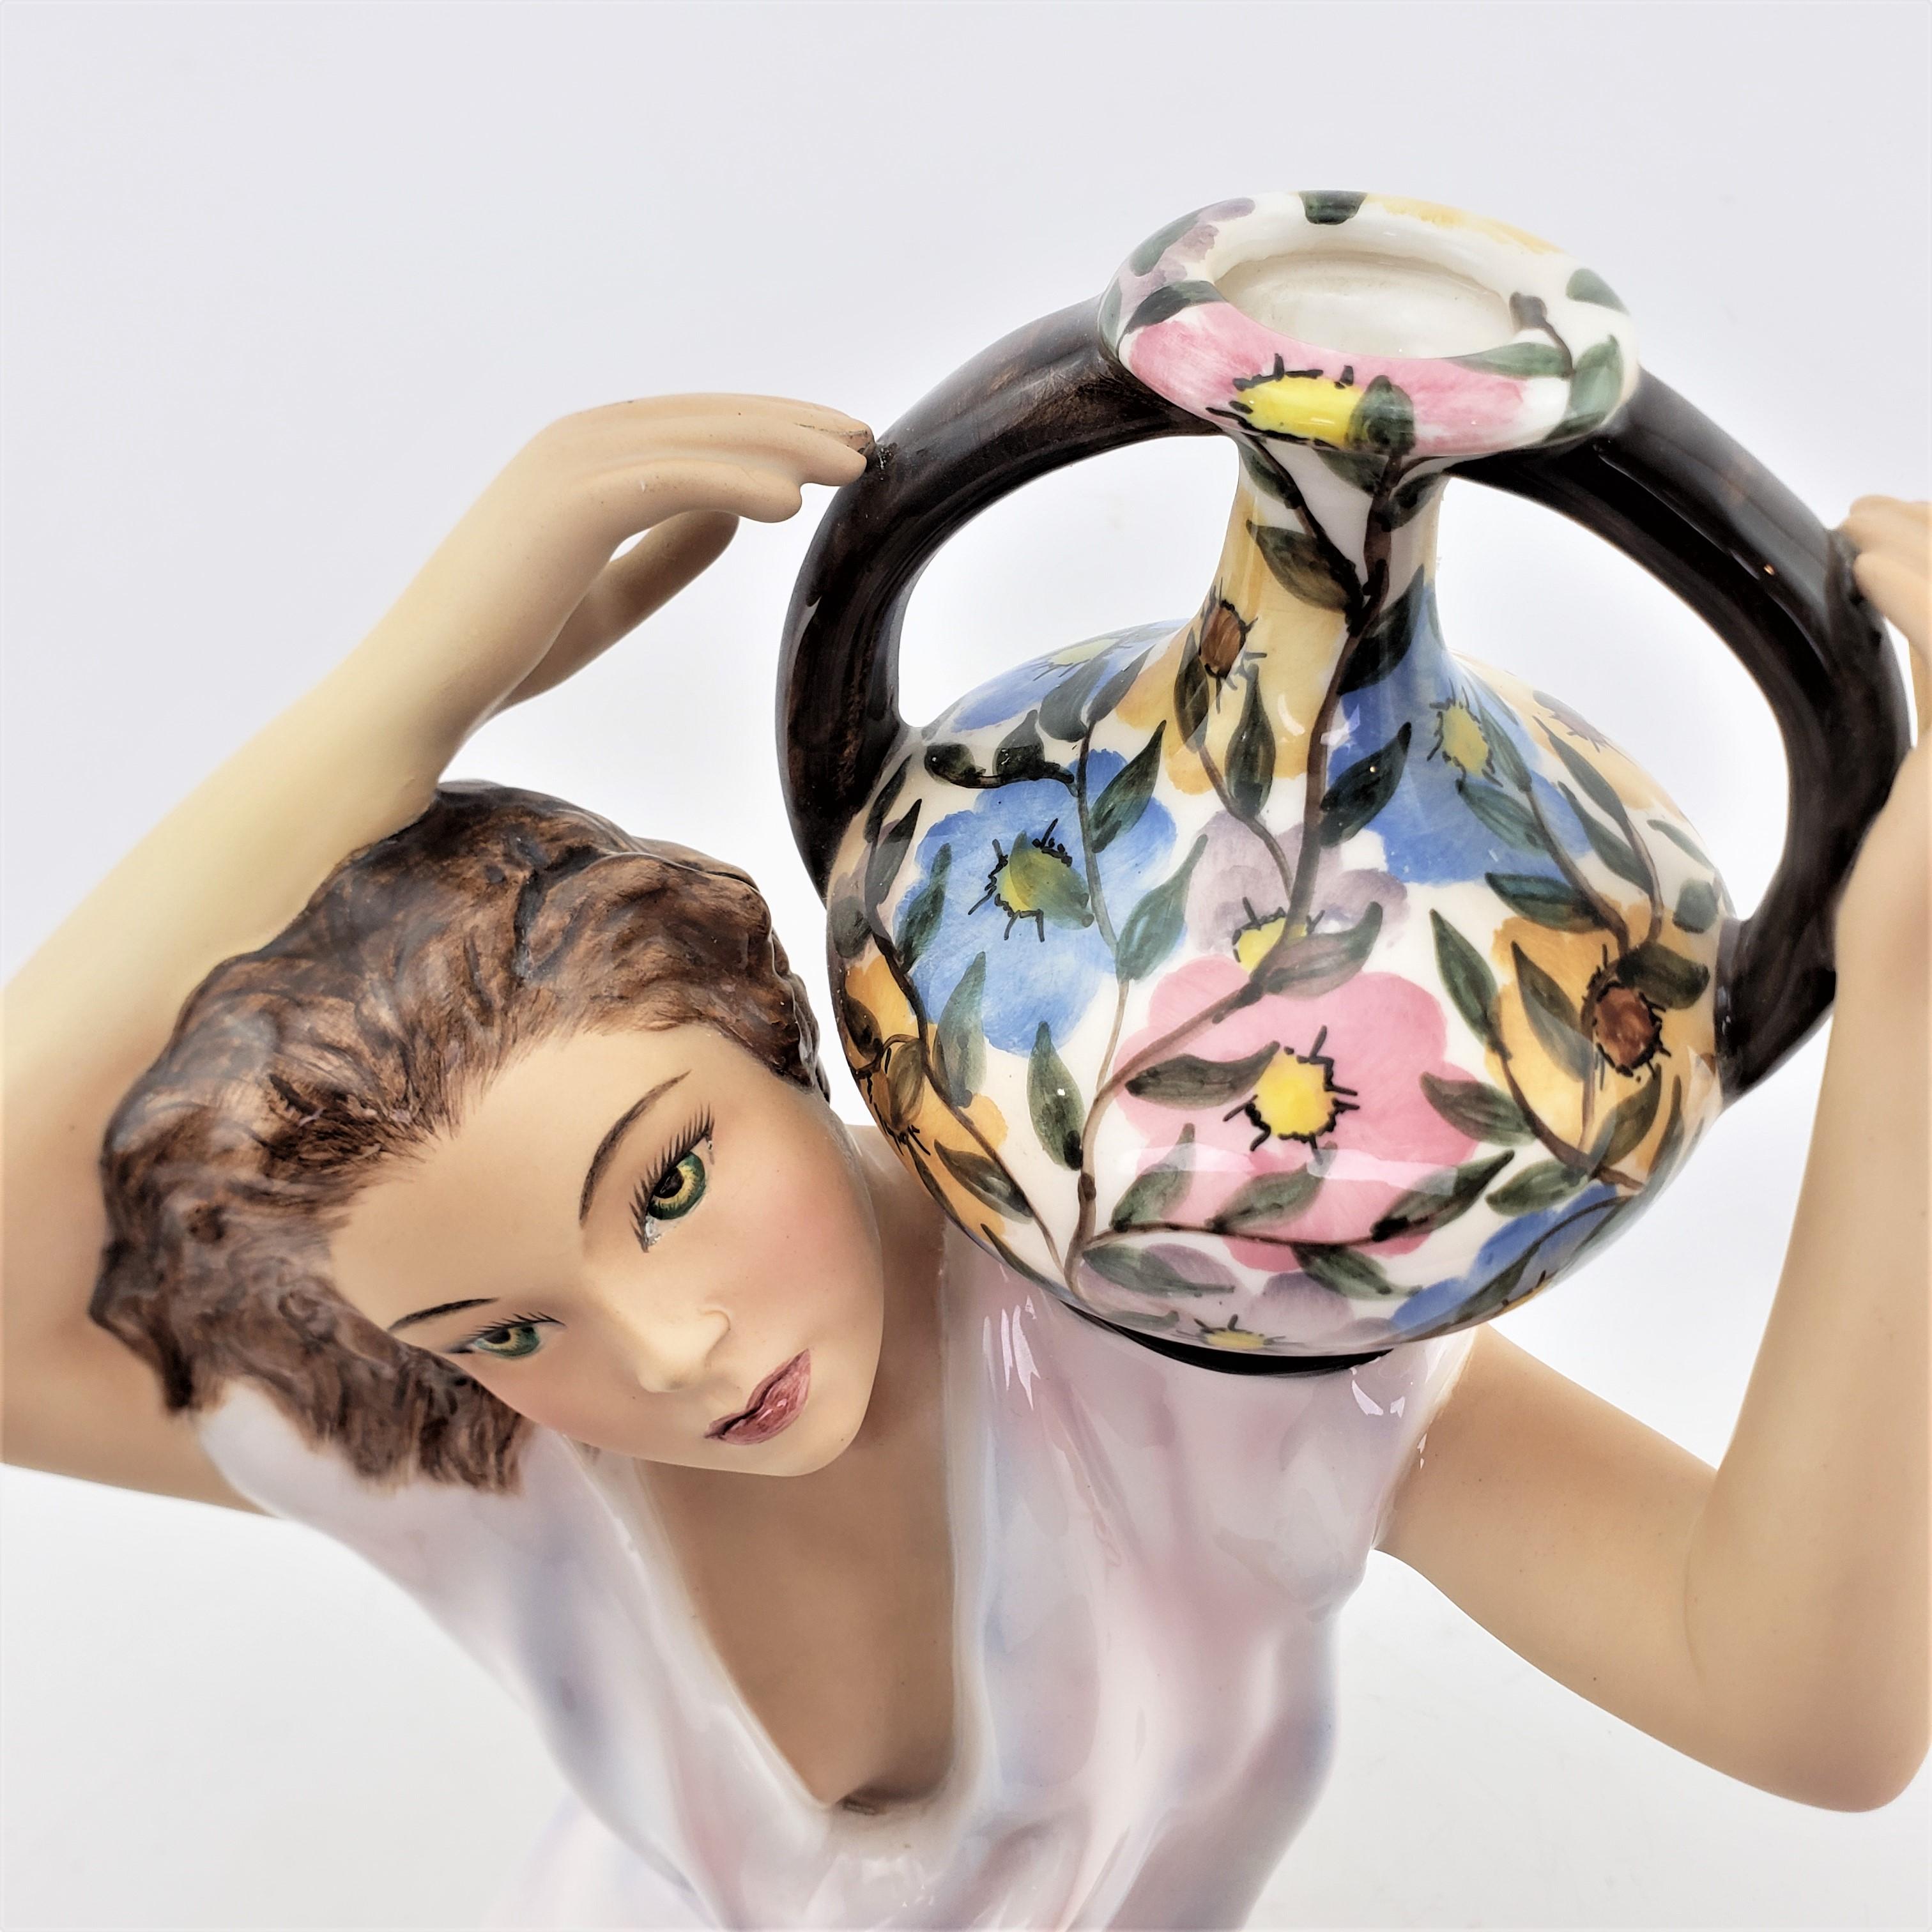 Le Bertetti Large Mid-Century Modern Torino Italy Ceramic Female Sculpture  For Sale 4